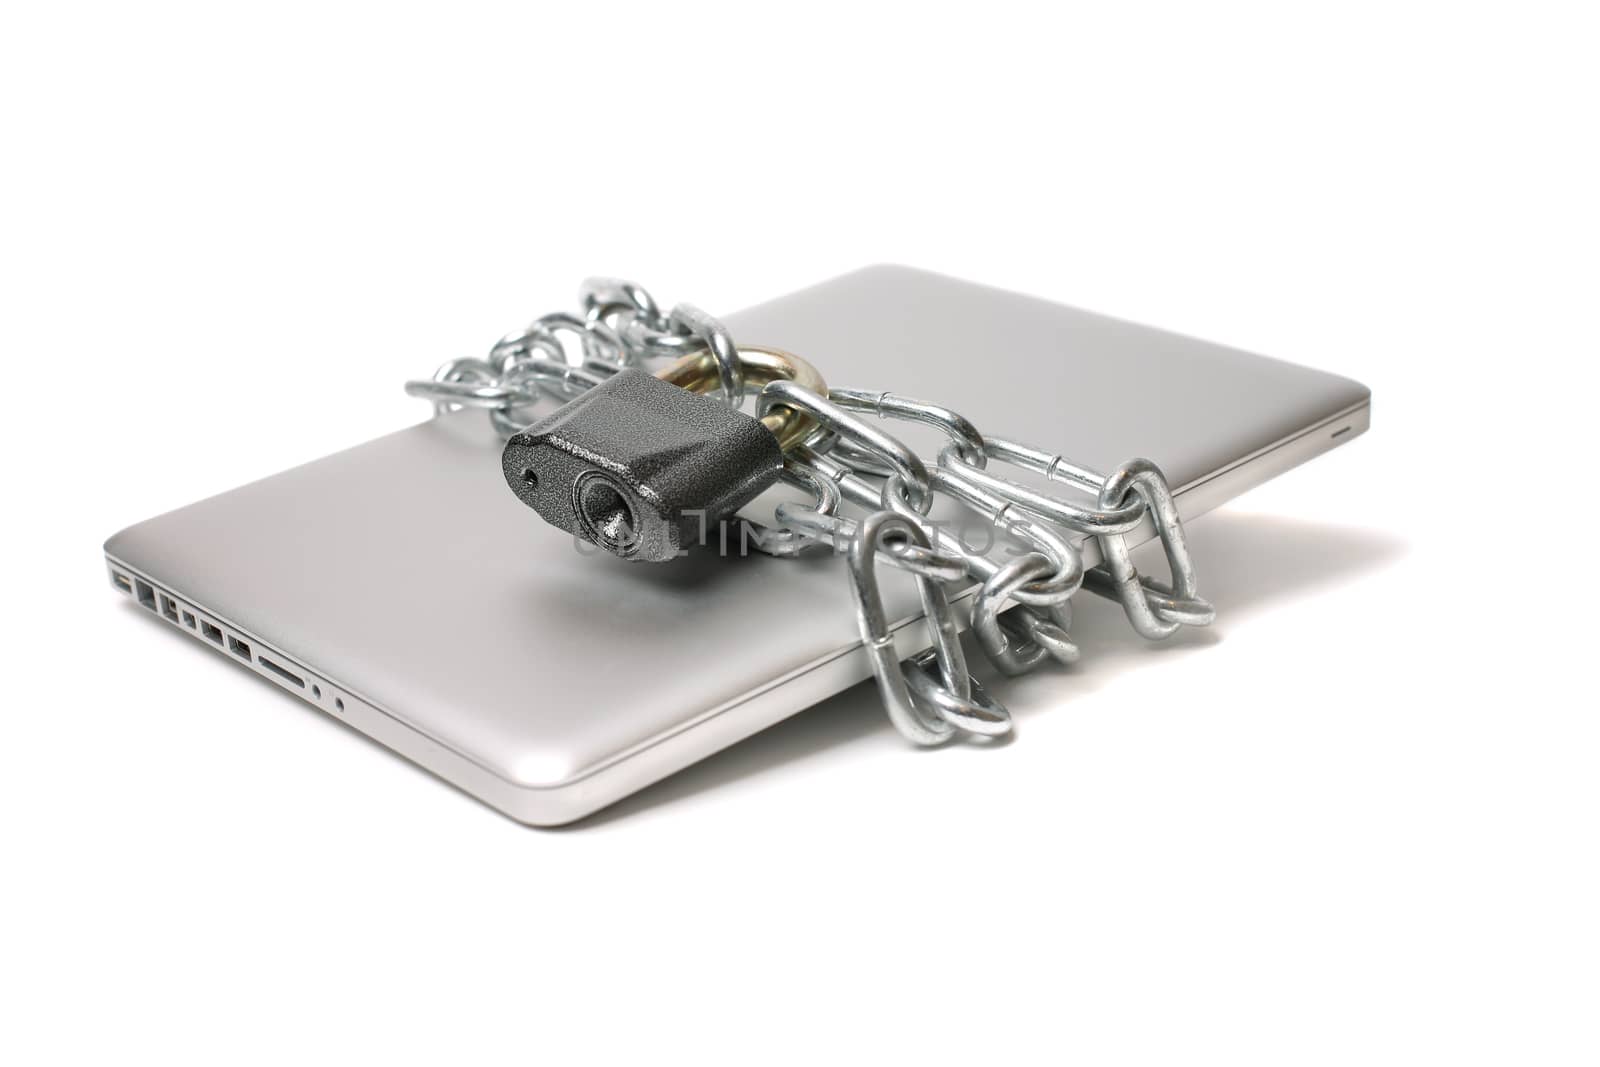 The lock on the laptop by yurii_bizgaimer